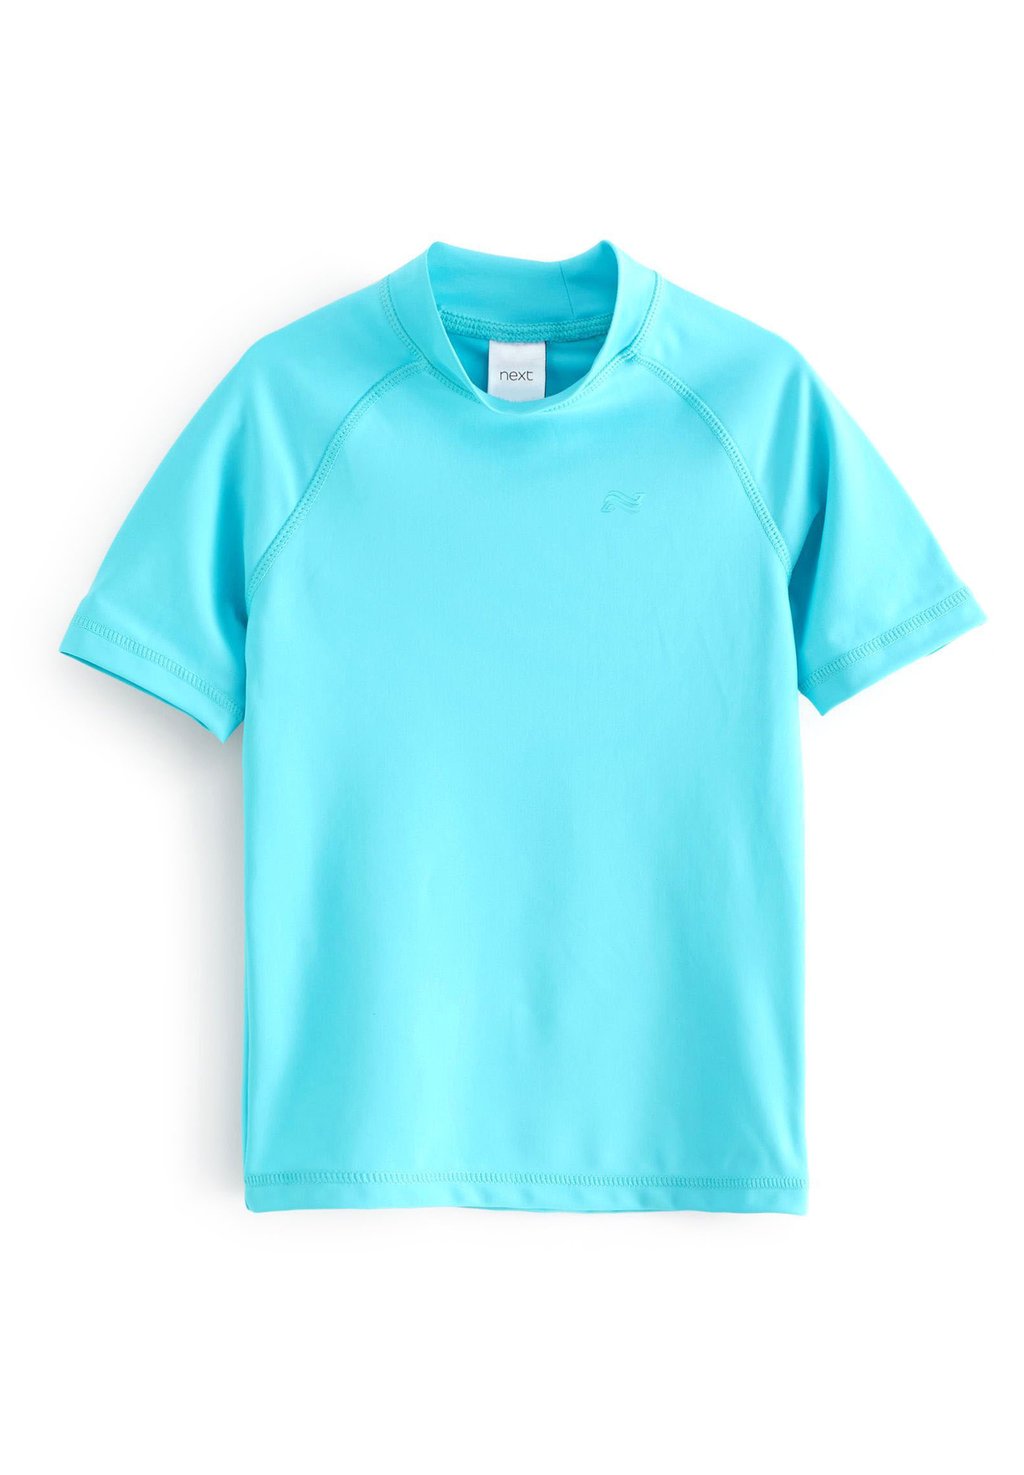 Рубашка для серфинга Short Sleeve Sunsafe Next, синий